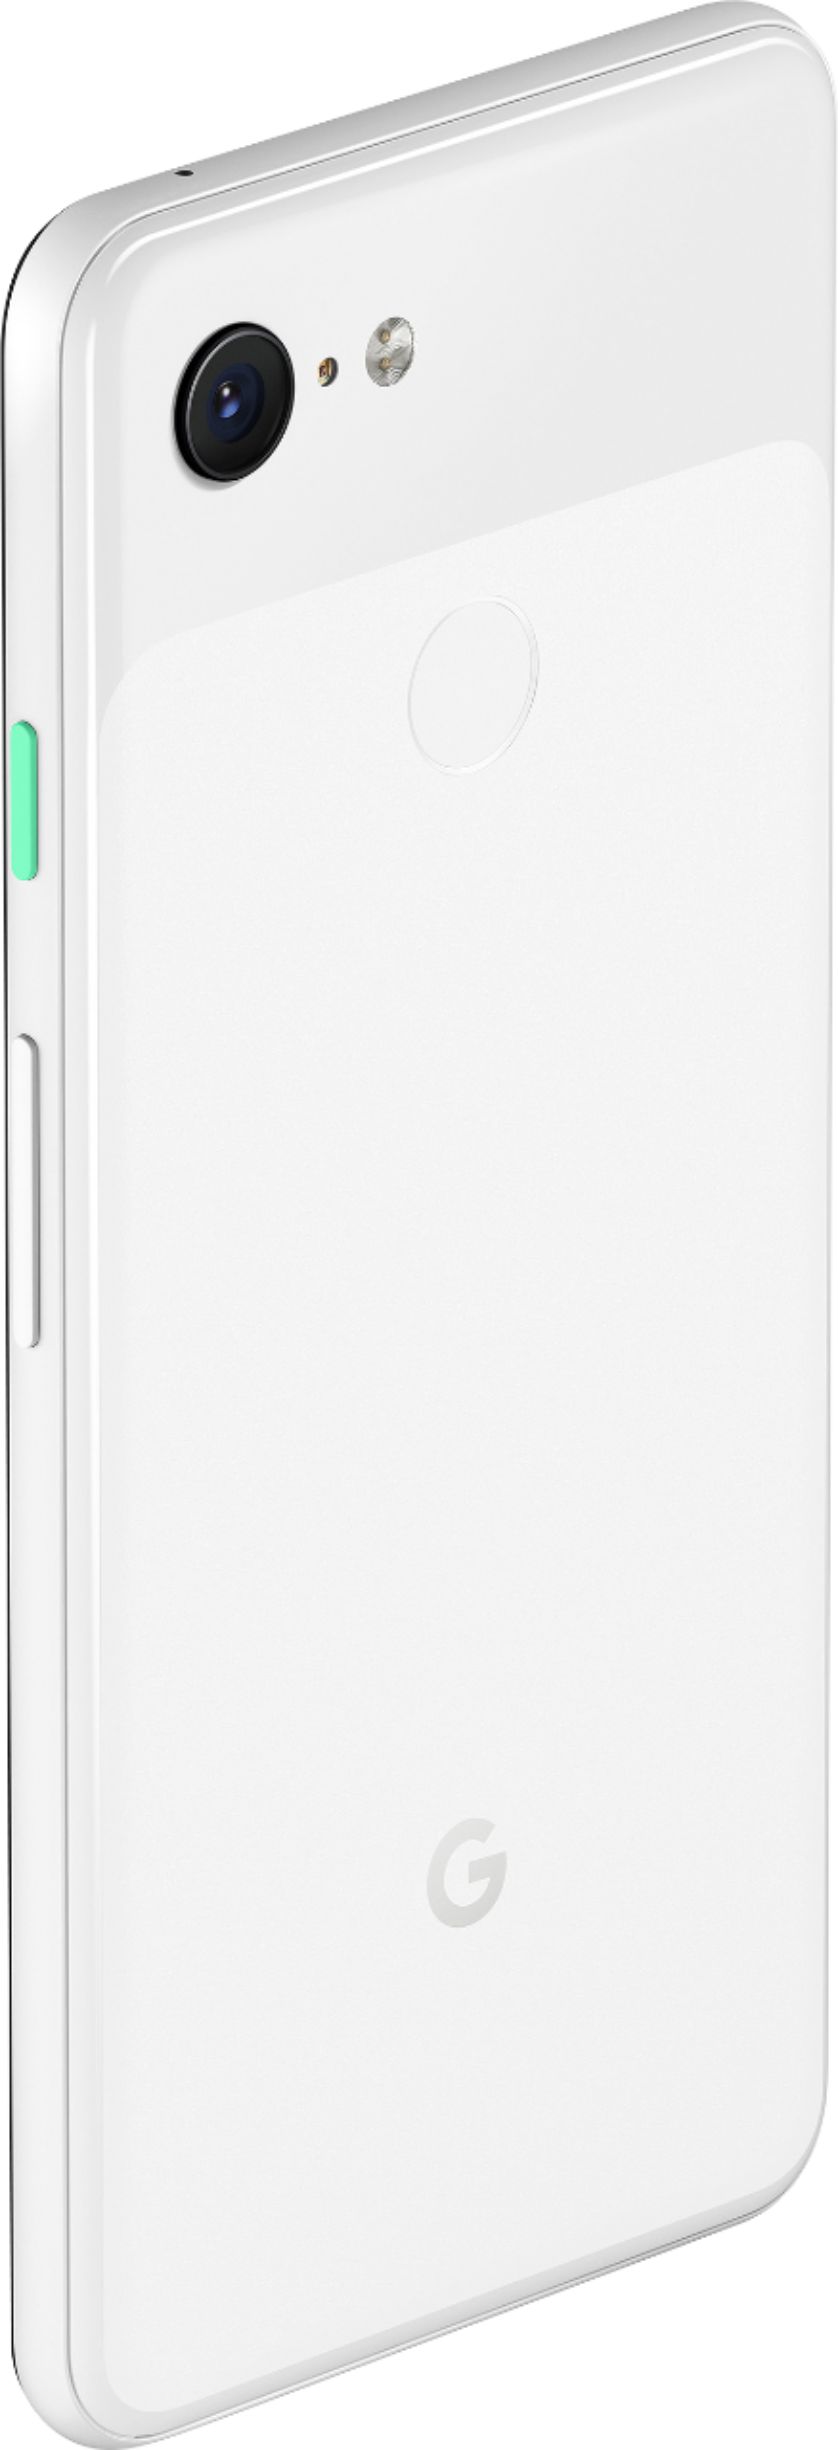 Best Buy: Google Pixel 3 64GB Clearly White (Verizon) GA00464-US